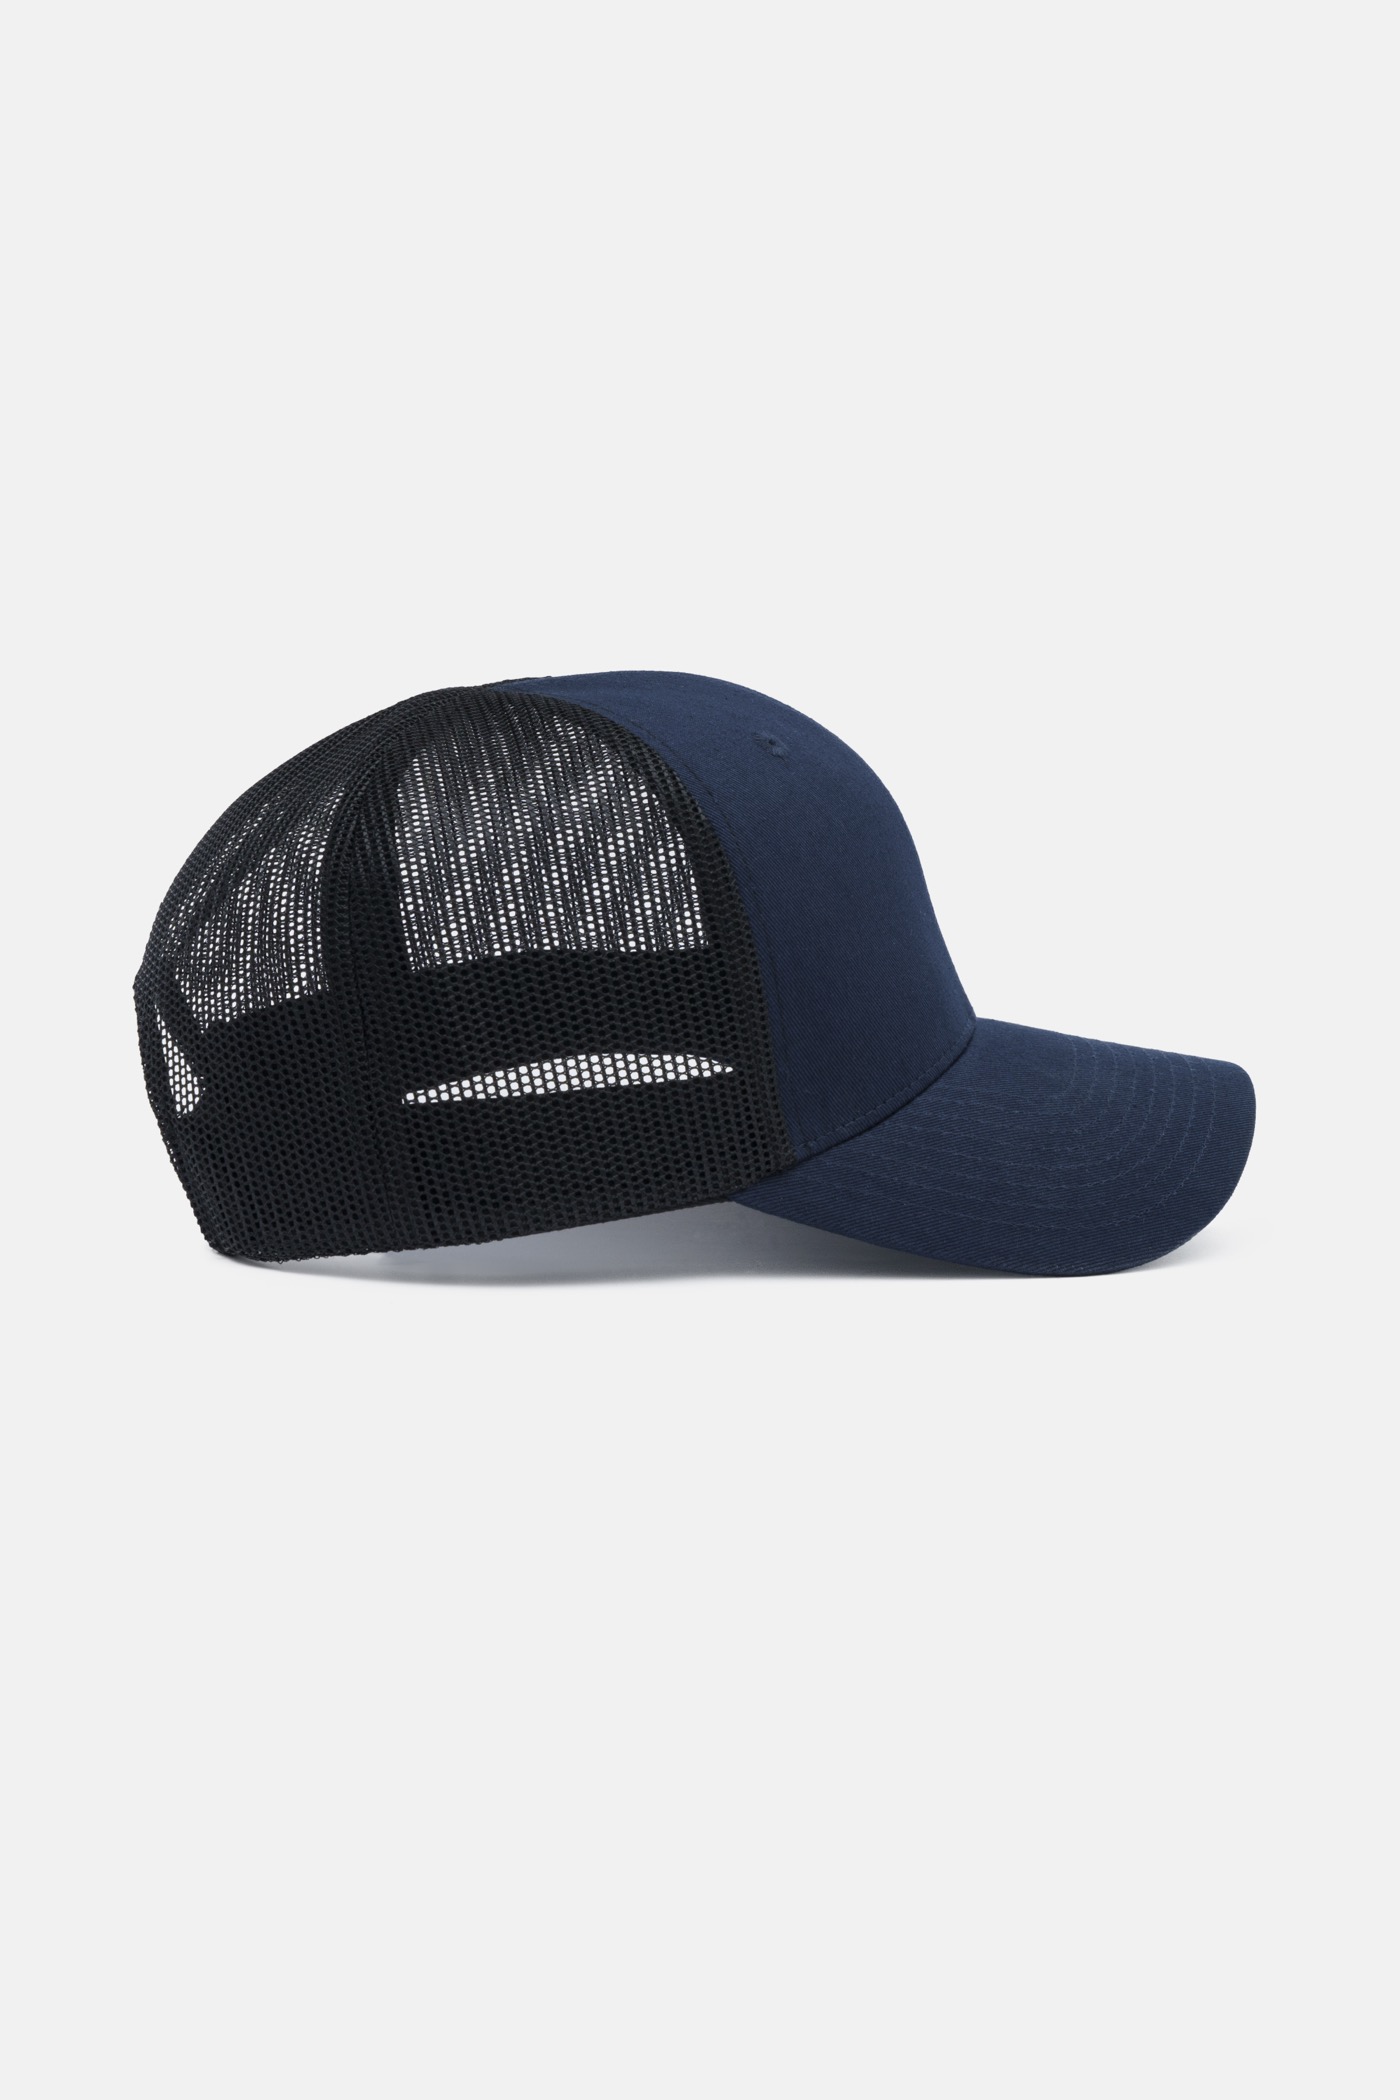 Flash sale - Mũ/Nón lưới trai Baseball Cap Proudly  Xanh Navy 3